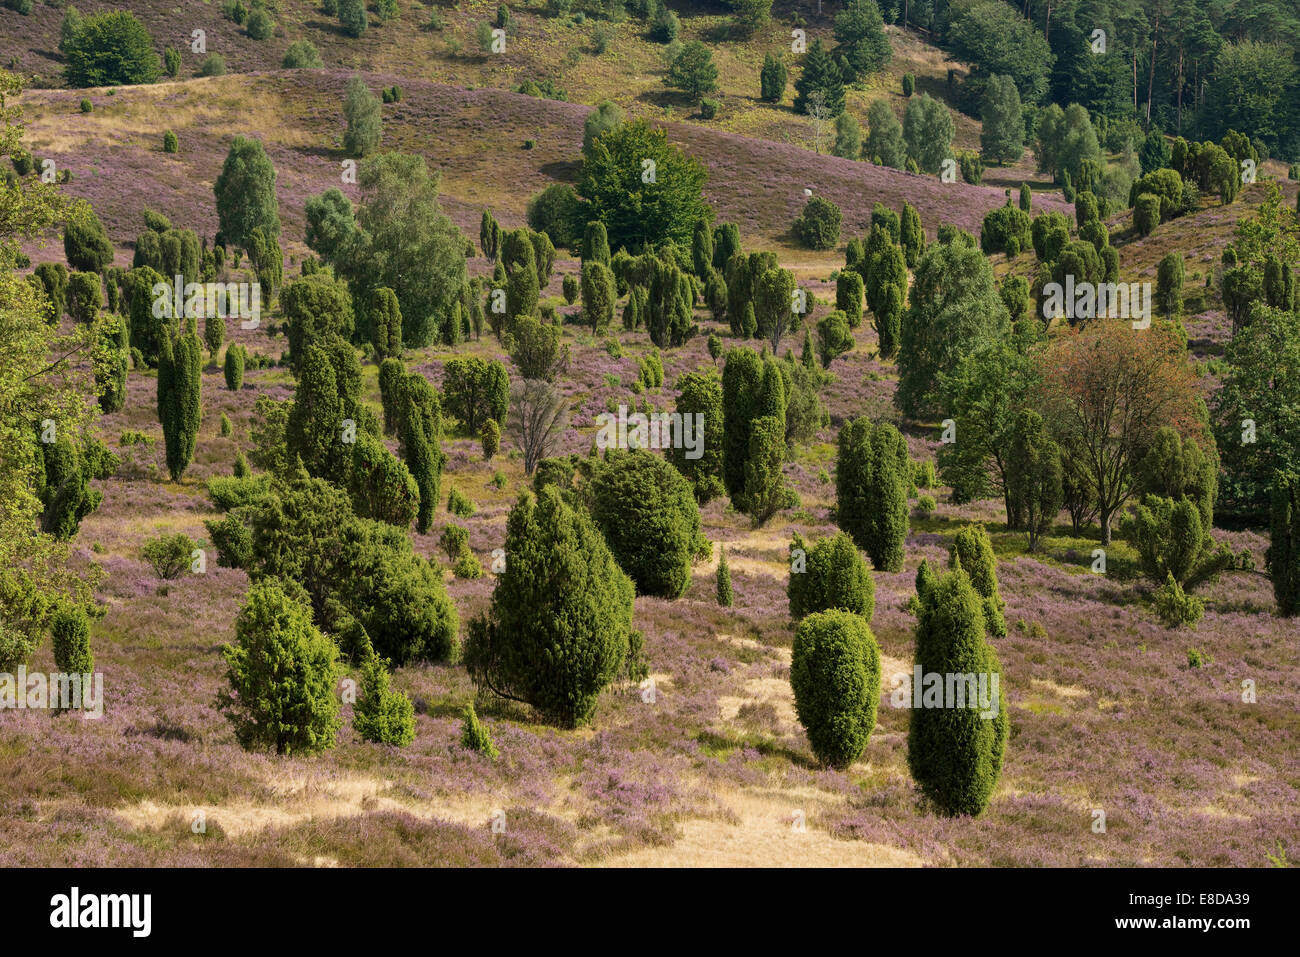 Heather (Calluna vulgaris), fioritura e comuni di ginepro (Juniperus communis), Totengrund Valley, Wilsede Foto Stock